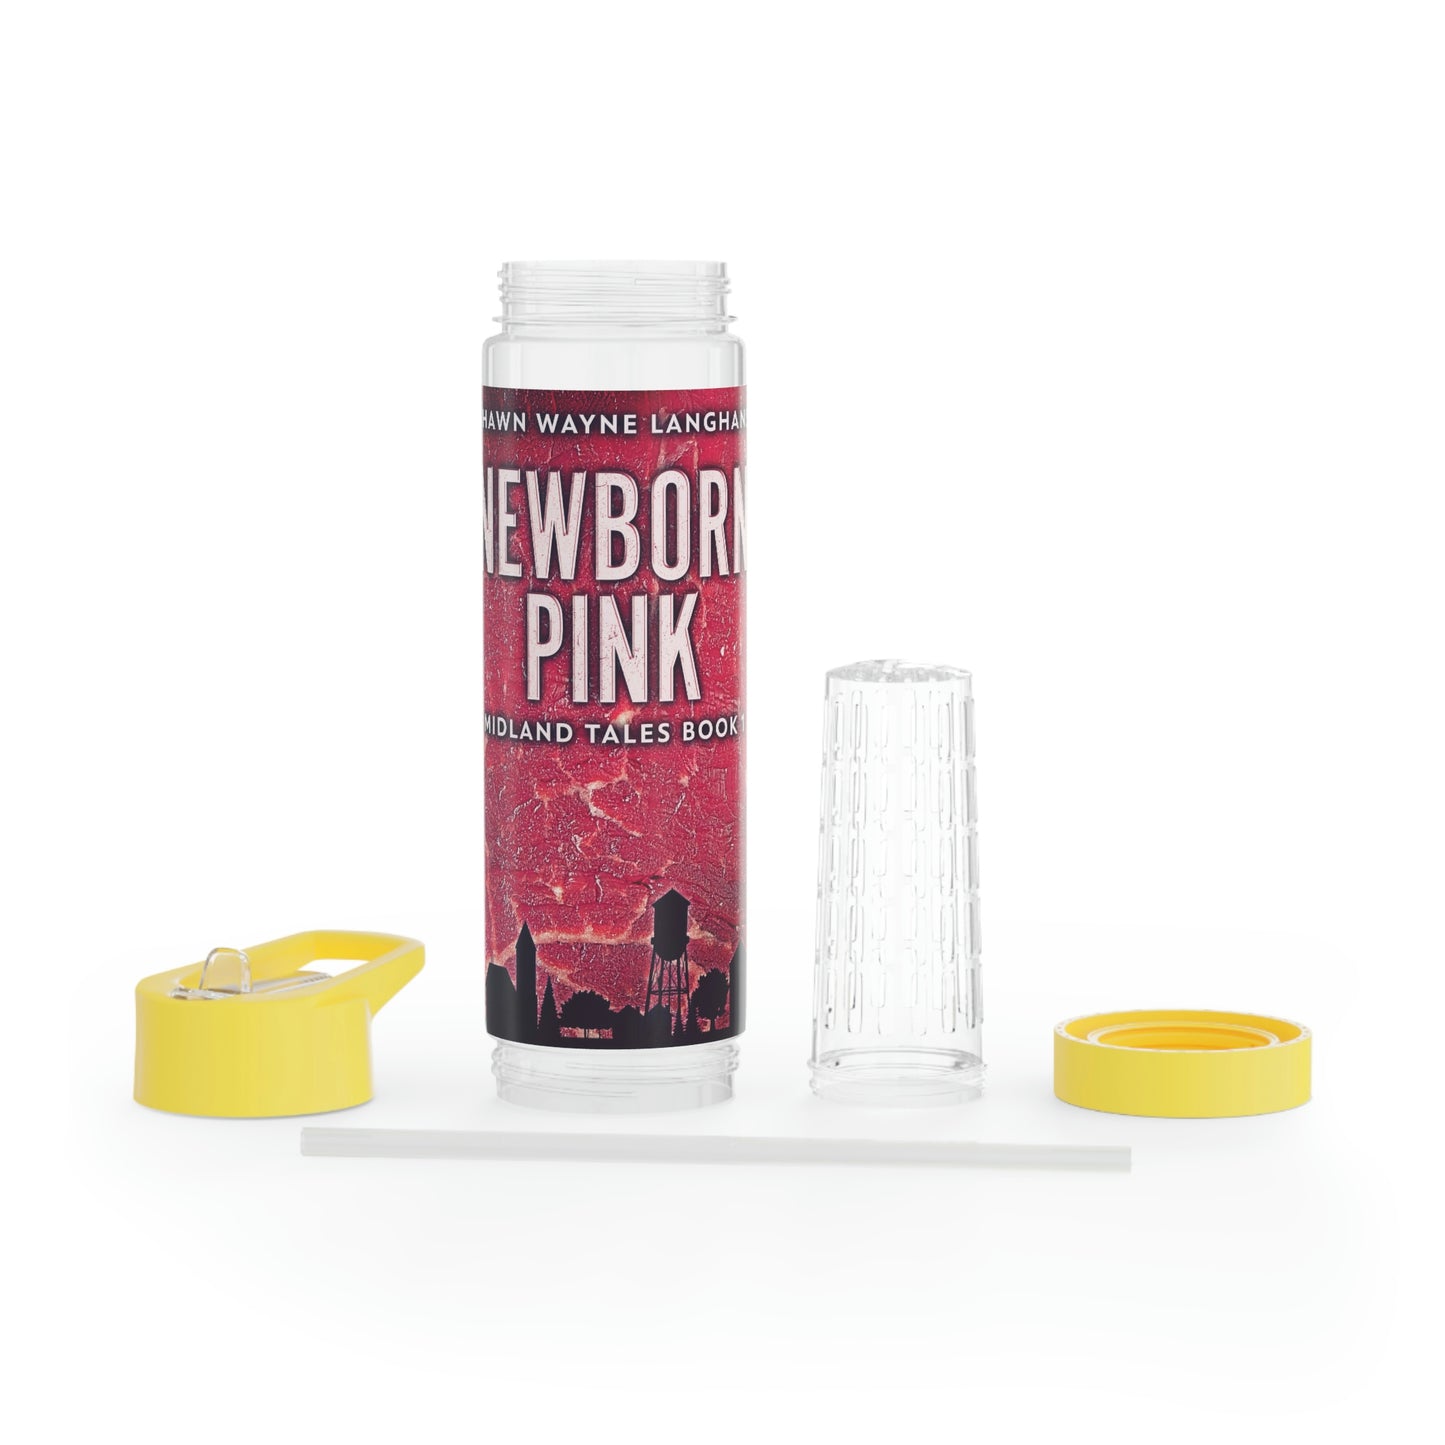 Newborn Pink - Infuser Water Bottle